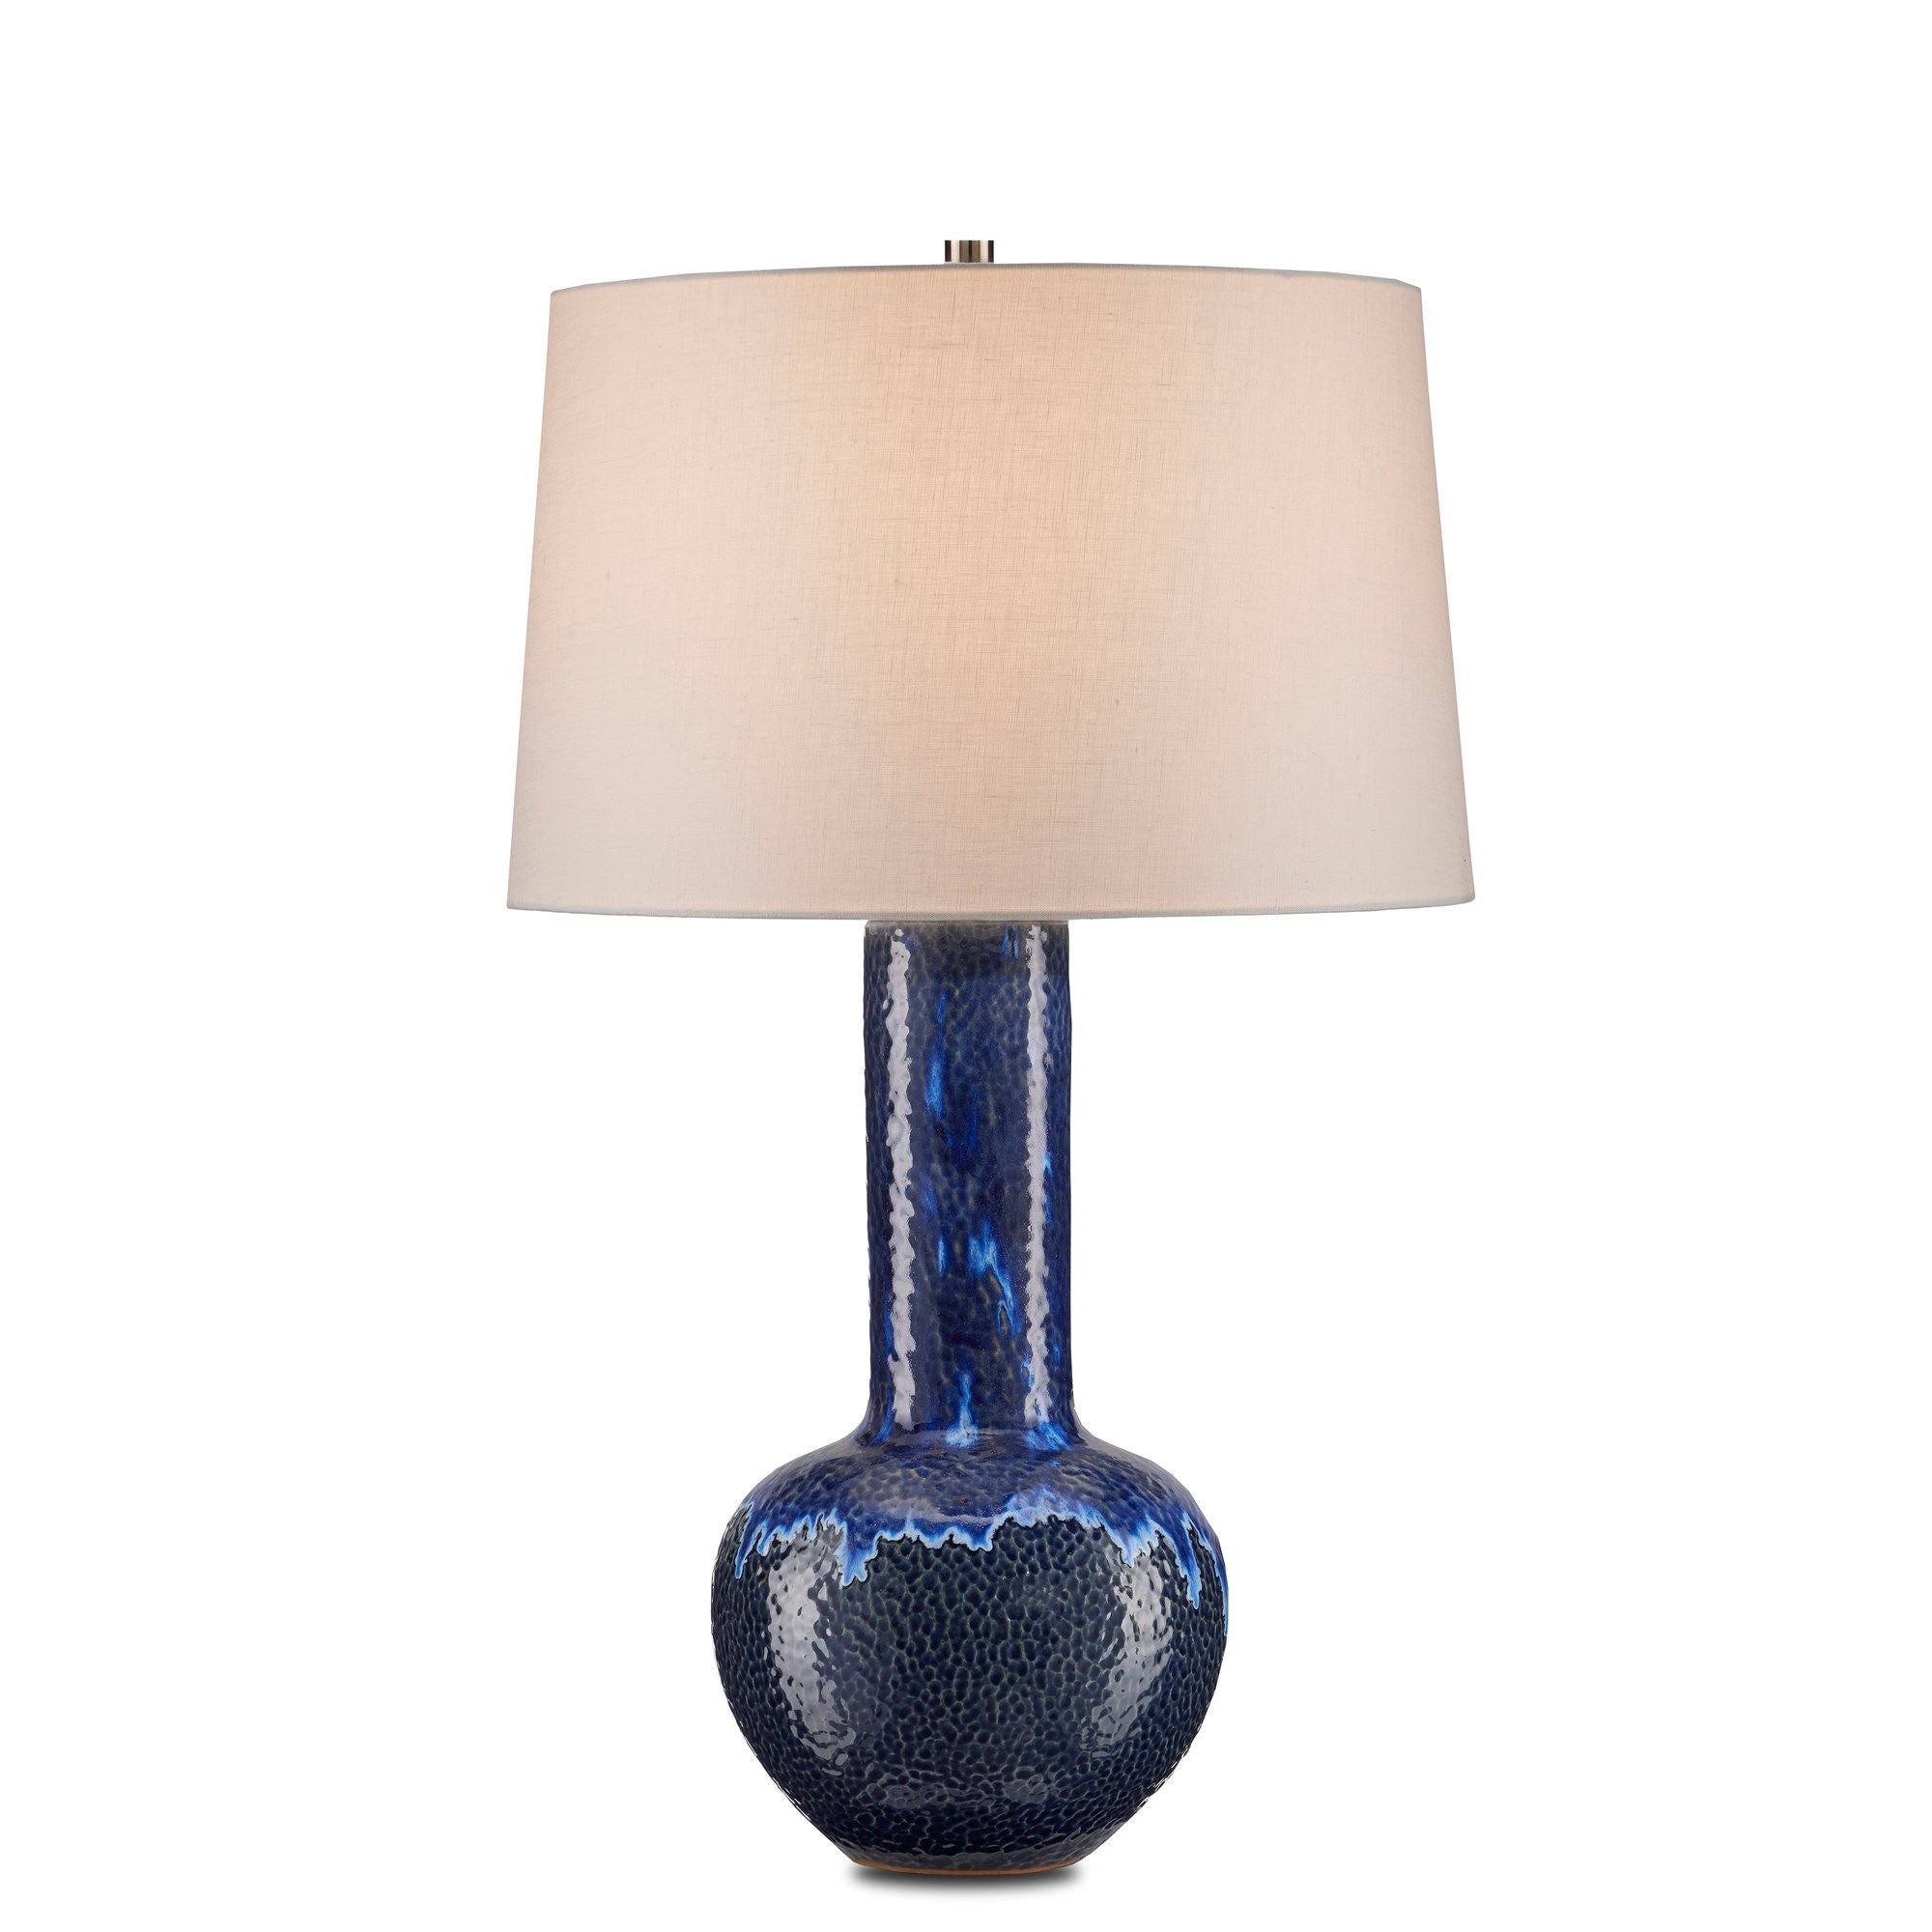 Kelmscott Blue Gourd Table Lamp - Reactive Blue